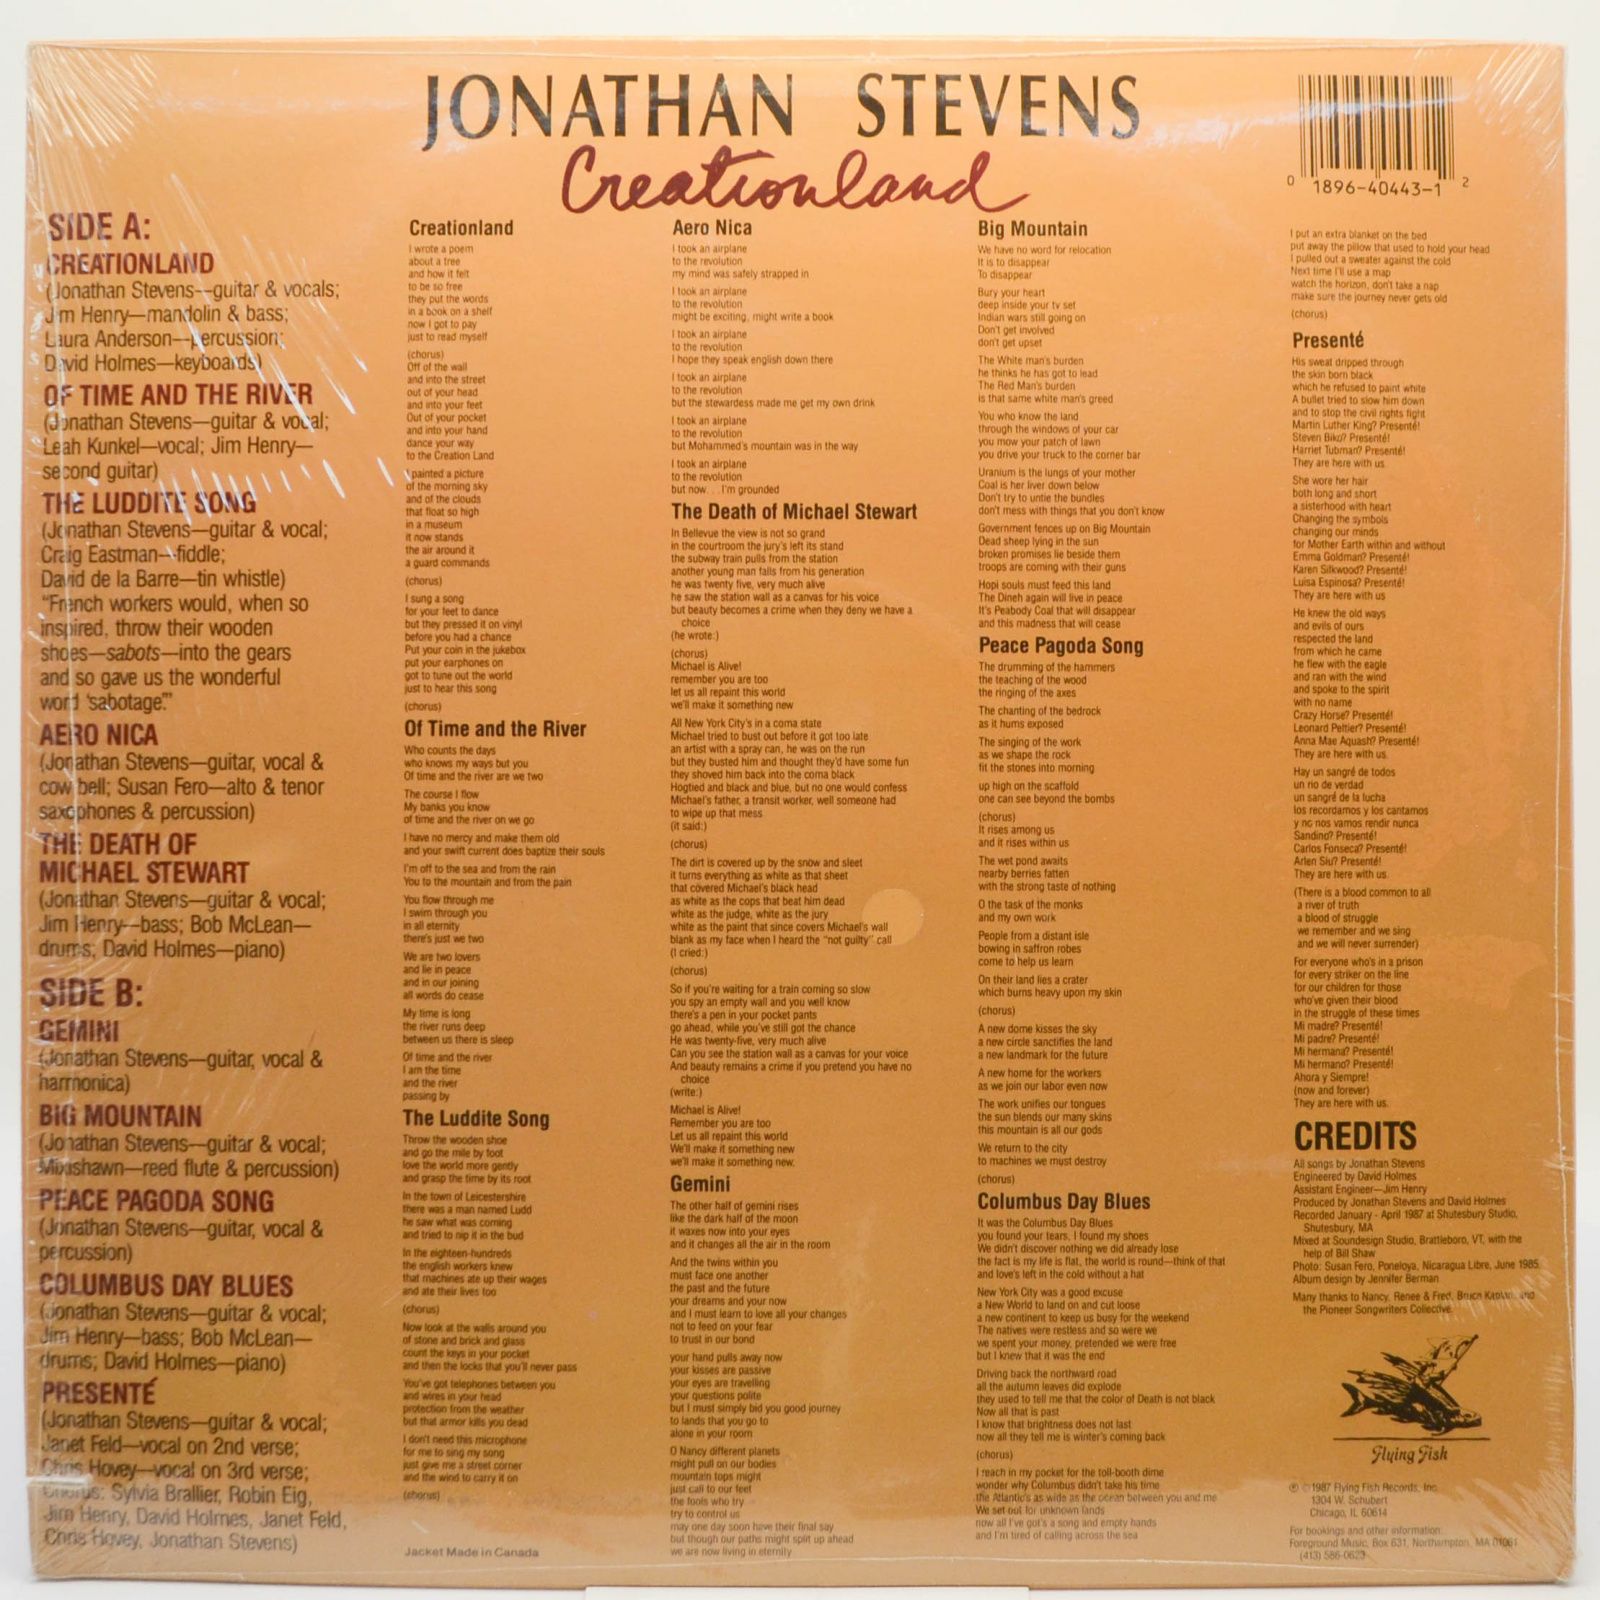 Jonathan Stevens — Creationland, 1987